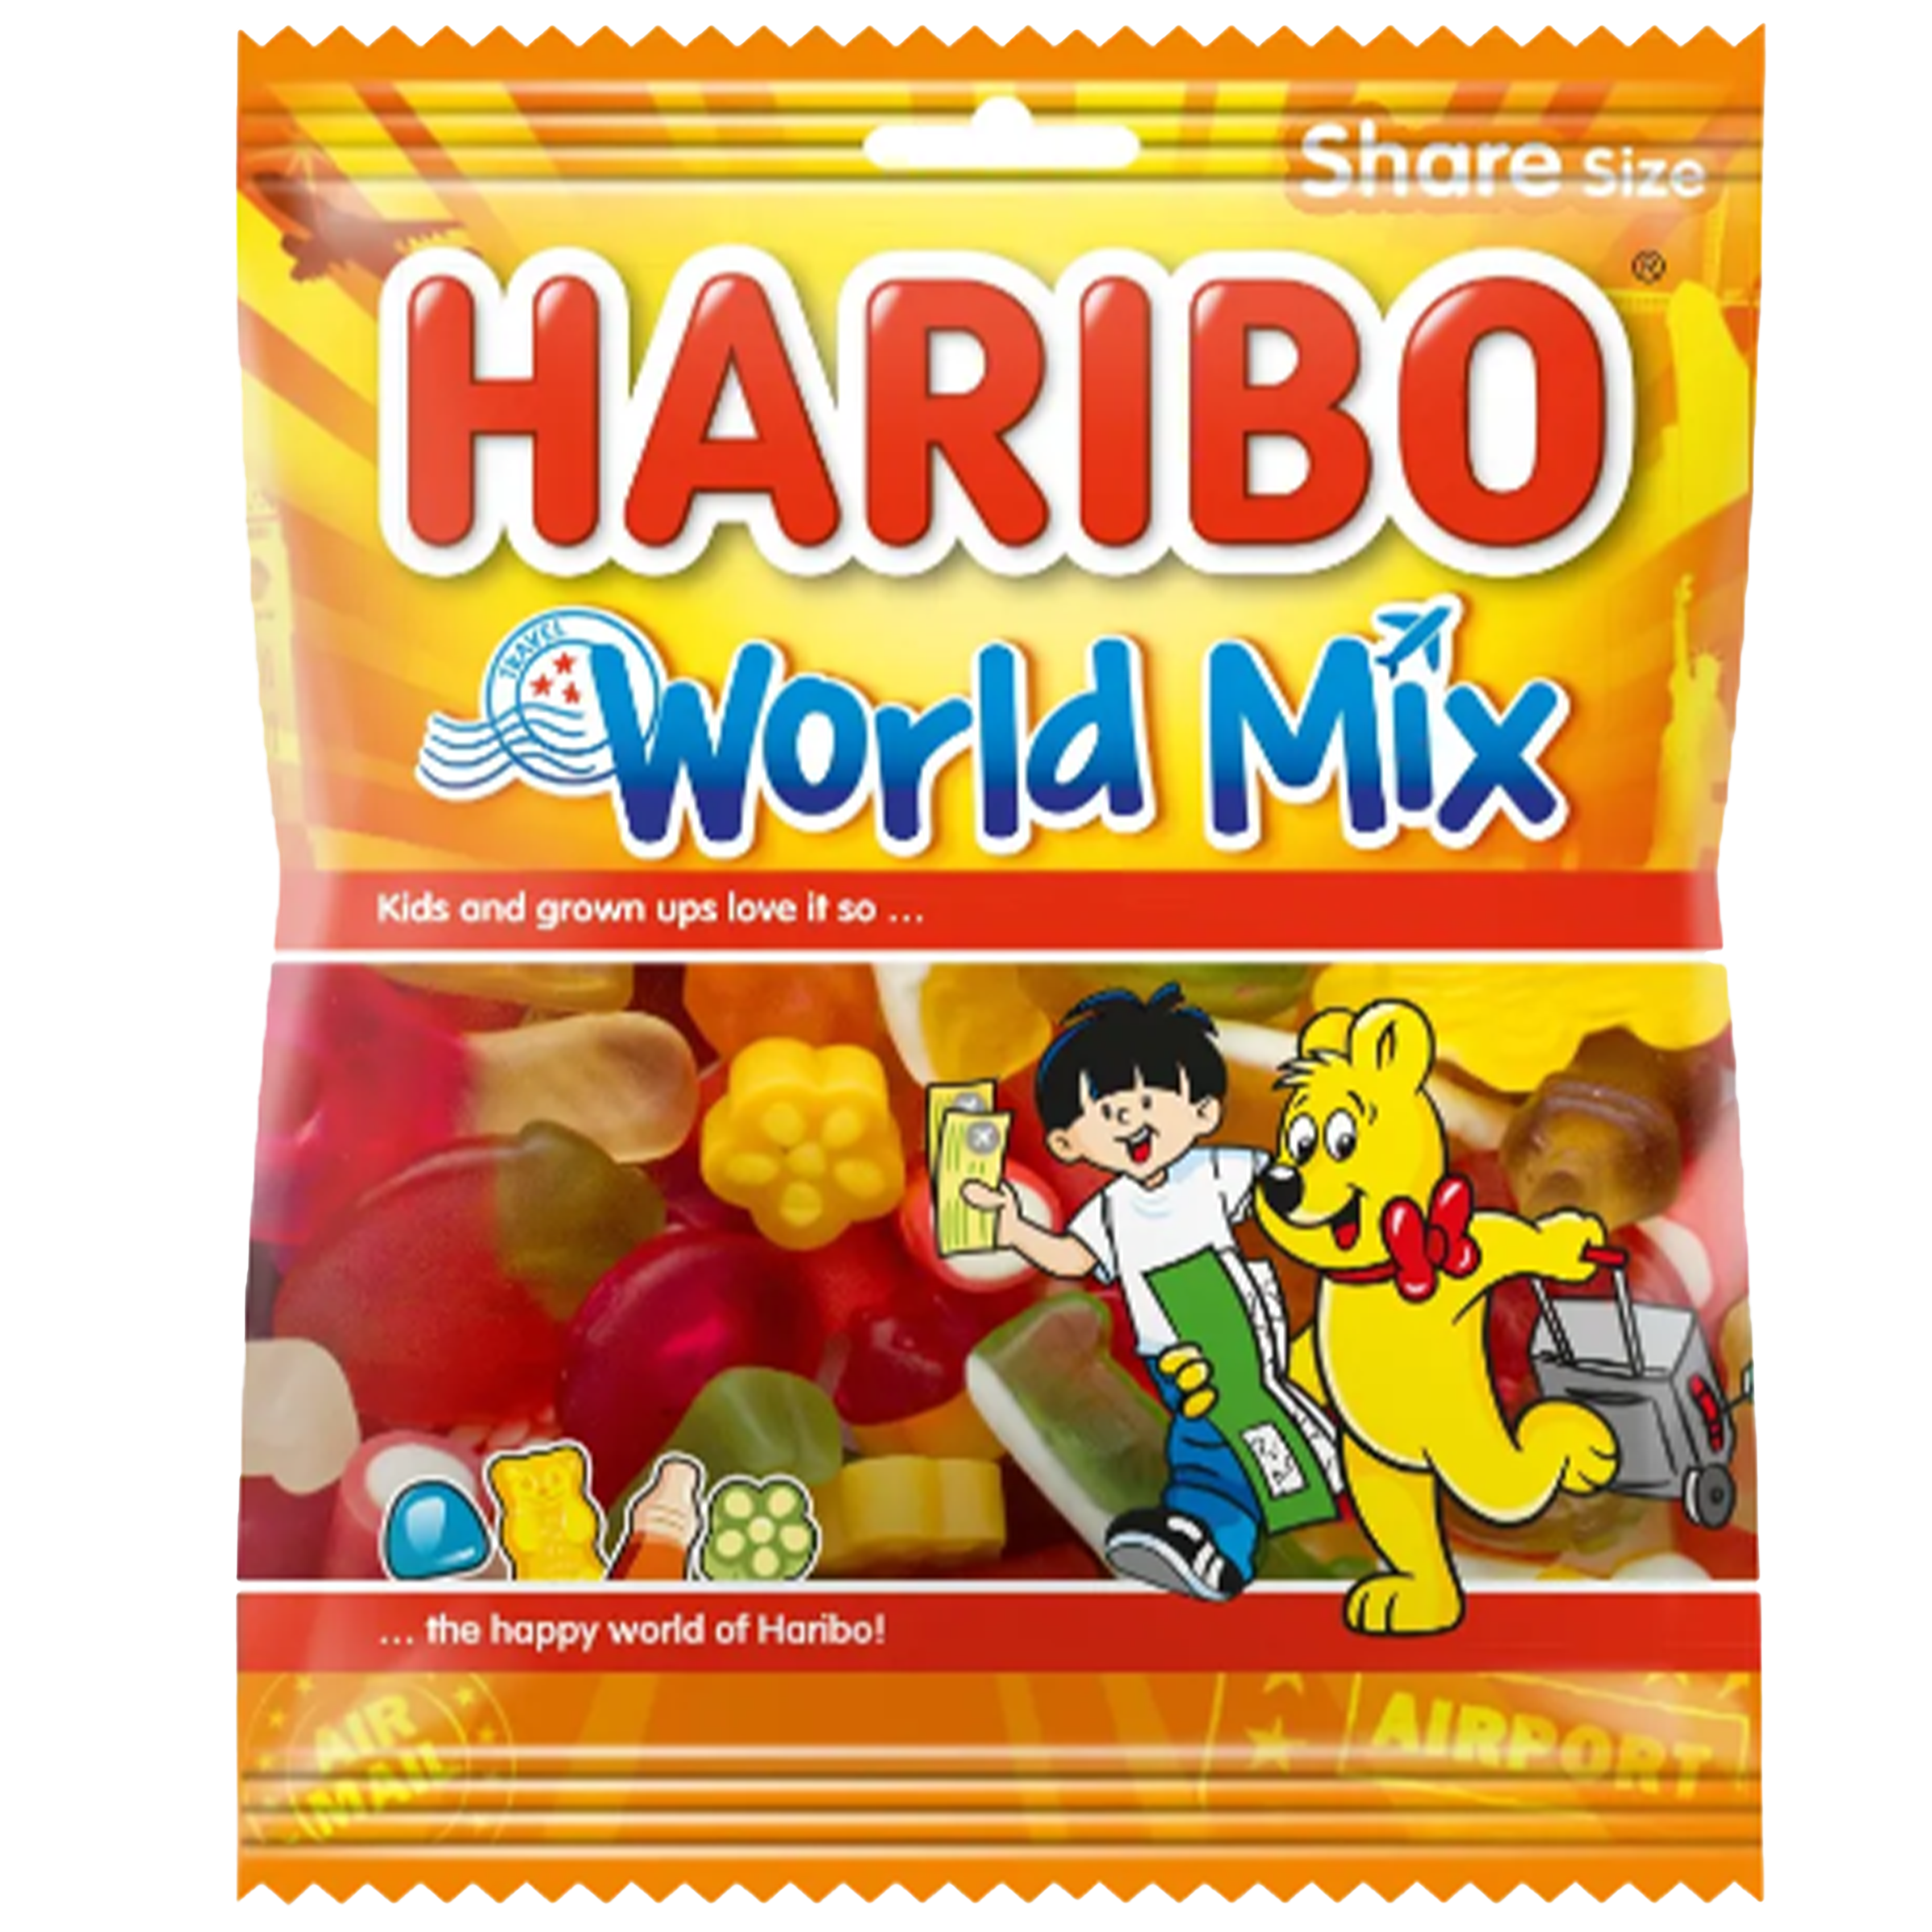 Haribo - World Mix (Europe)